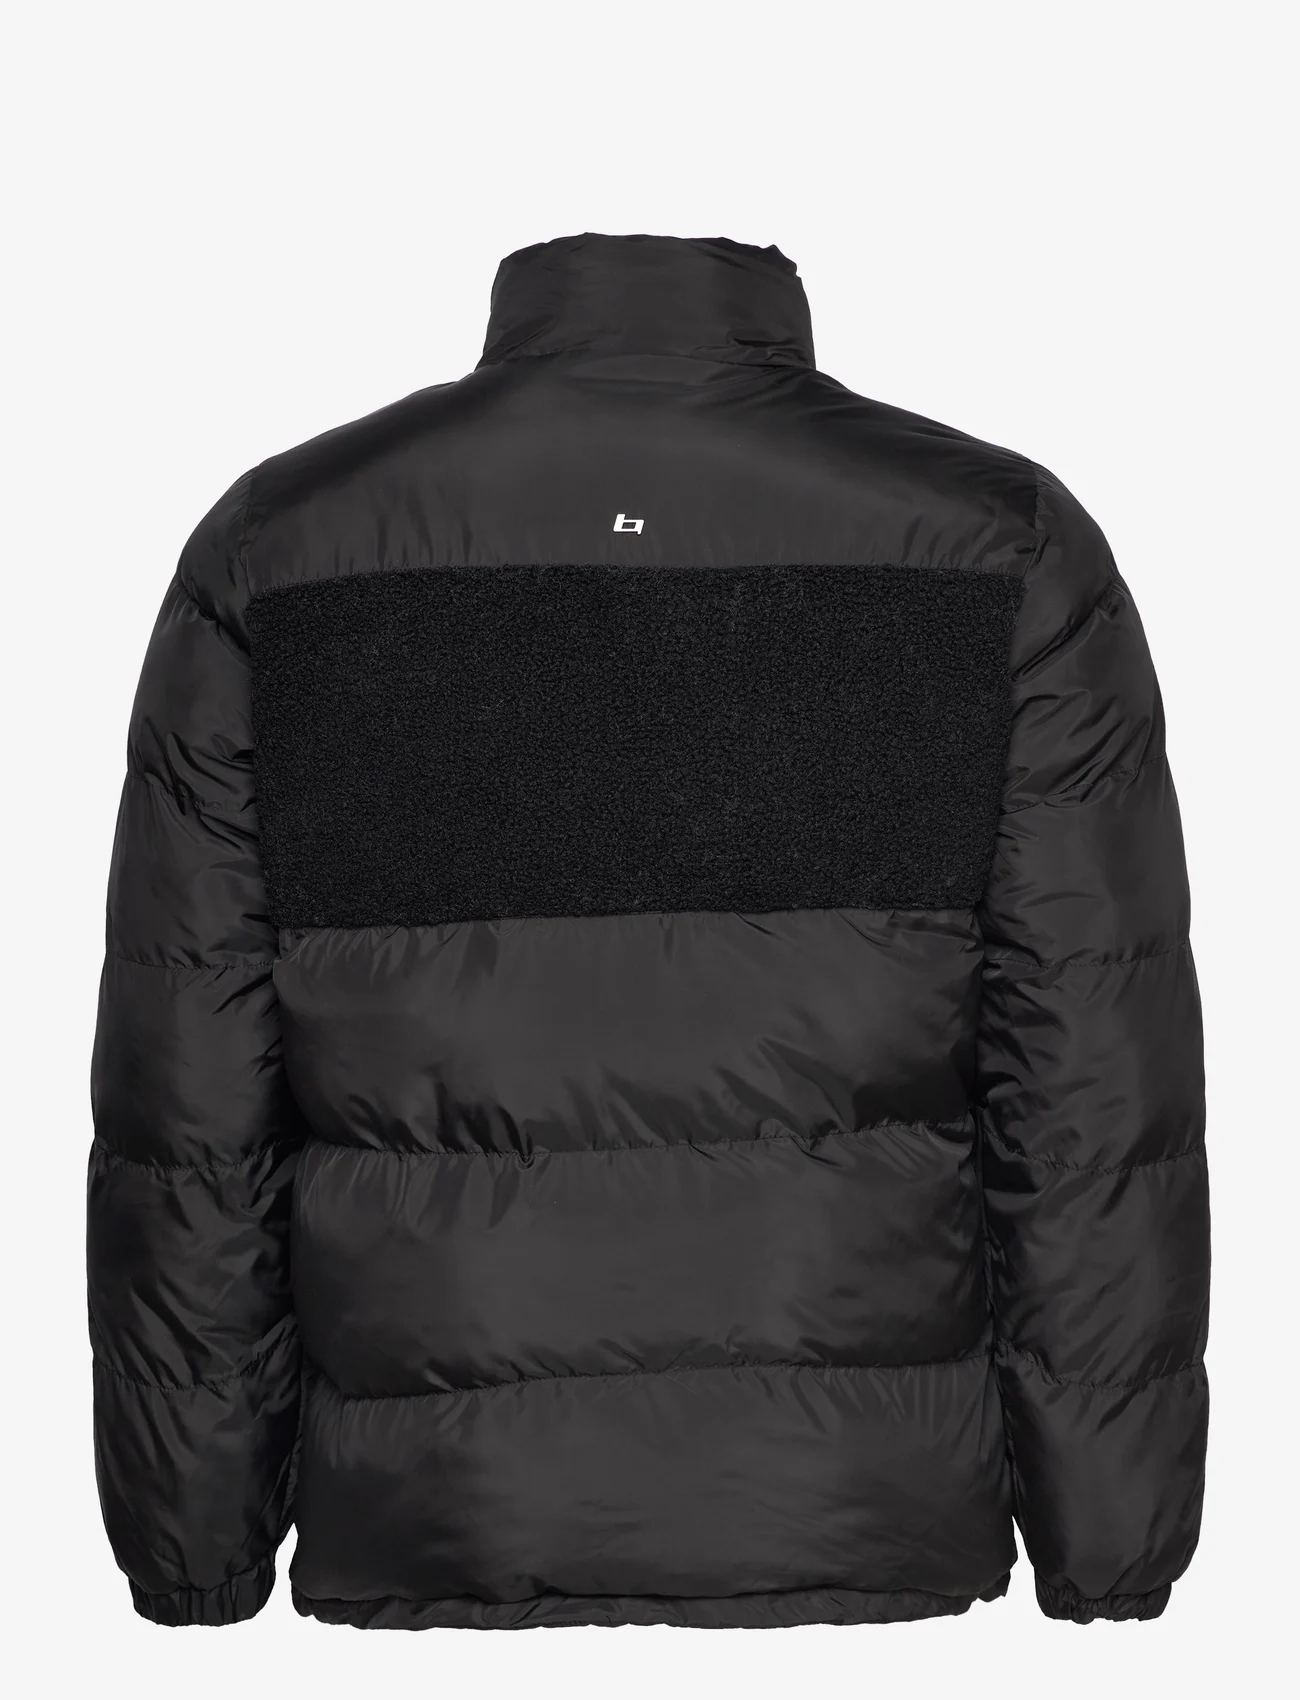 Blend - Outerwear - winter jackets - black - 1